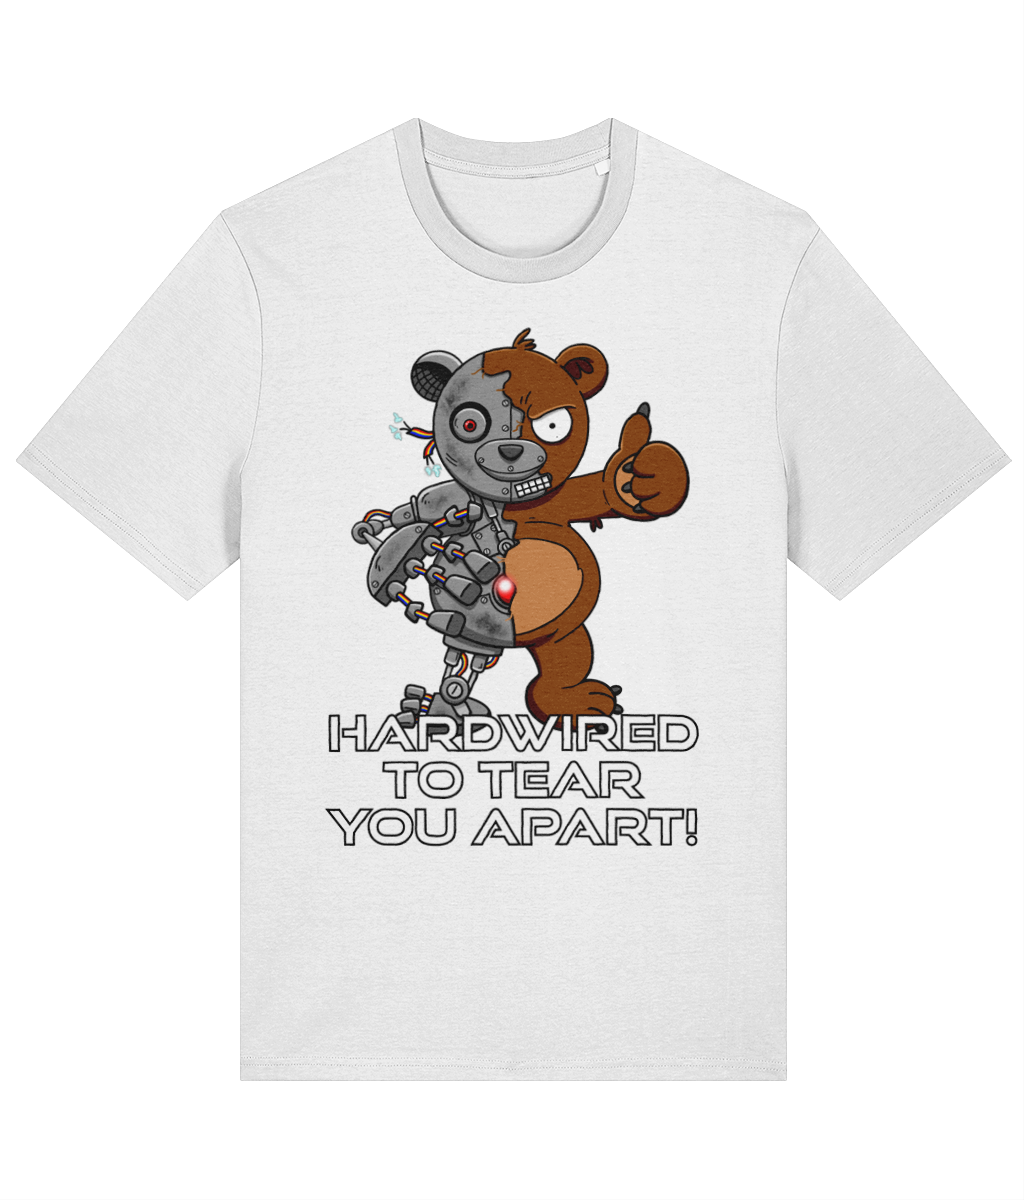 BEARPOCALYPSE! - Hardwired T-Shirt